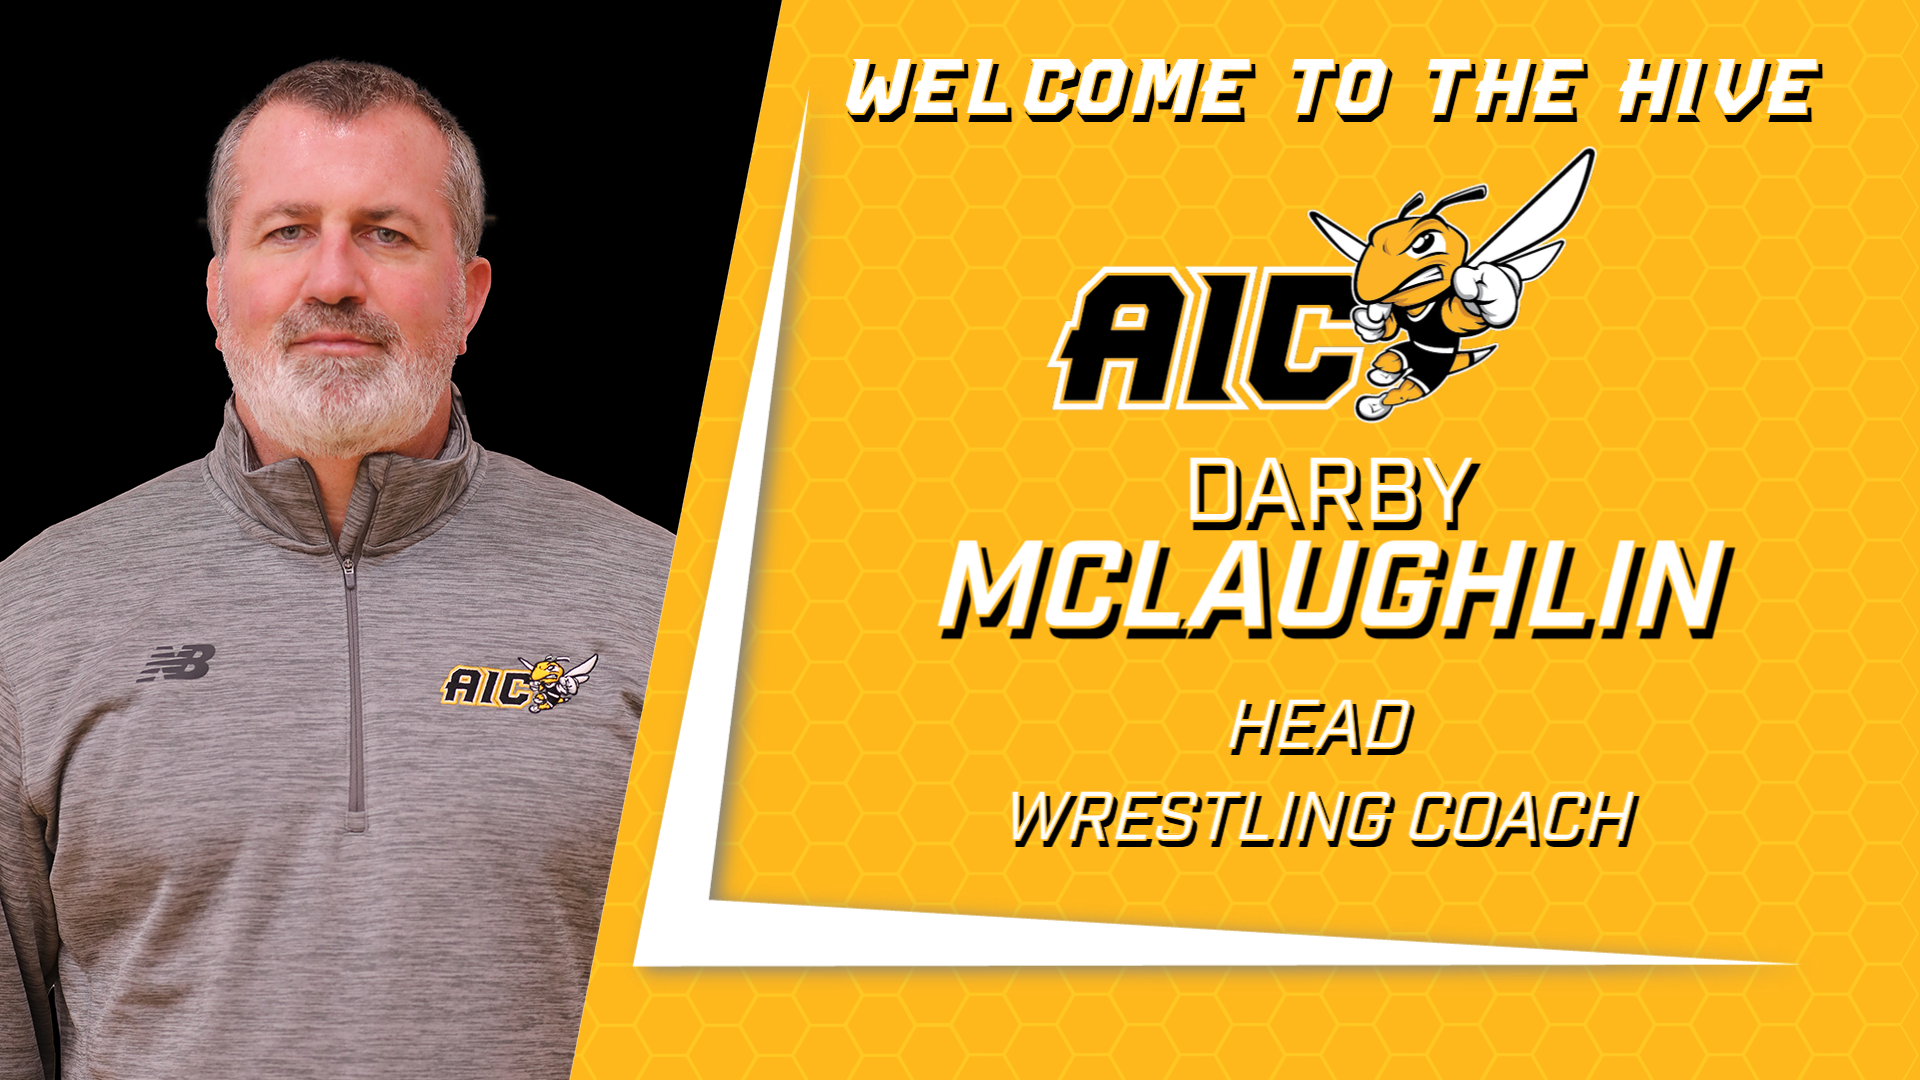 McLaughlin named Head Wrestling Coach